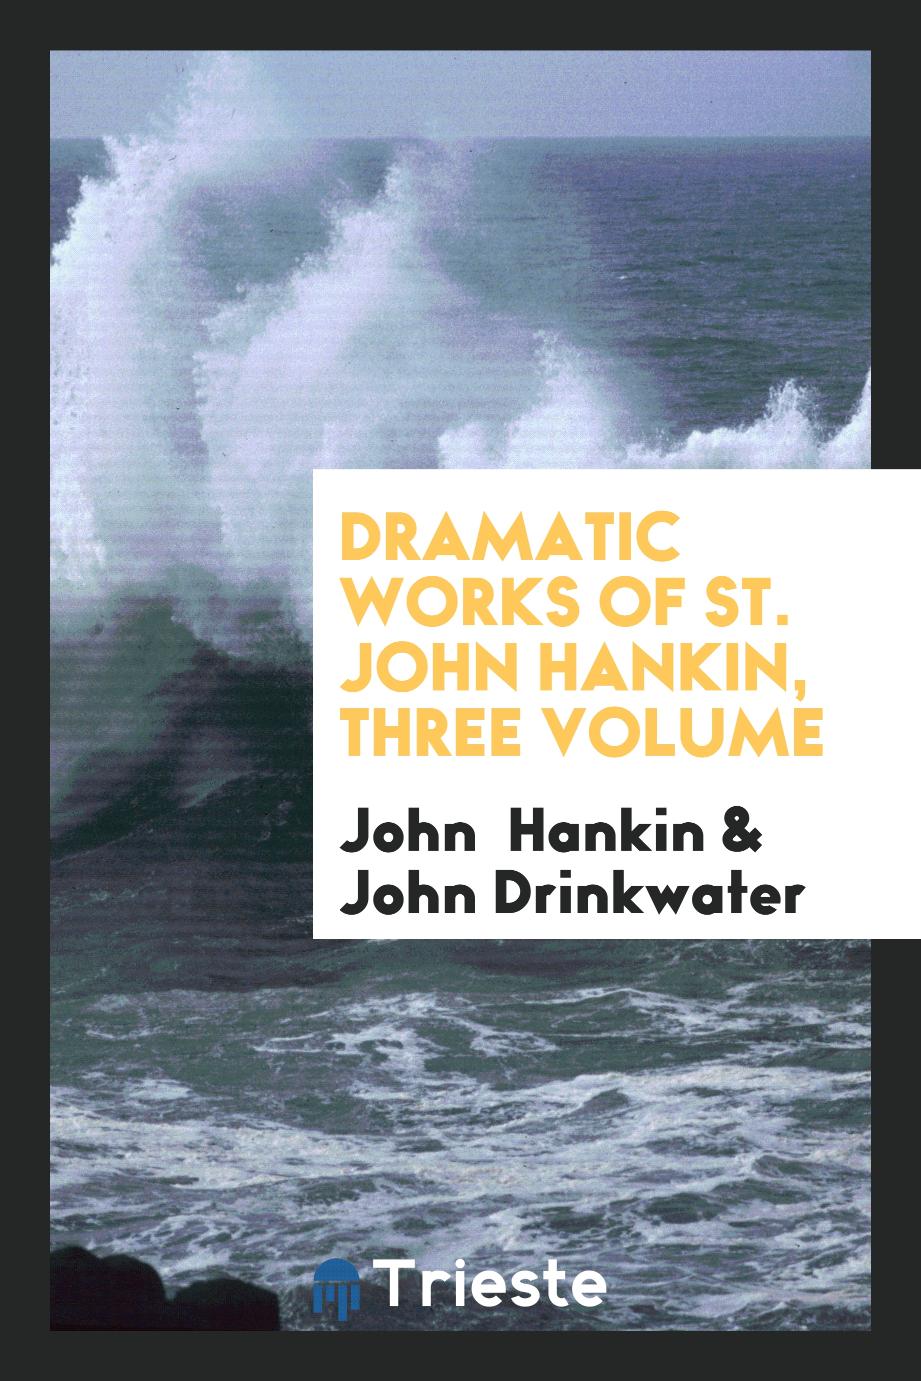 Dramatic works of St. John Hankin, three volume